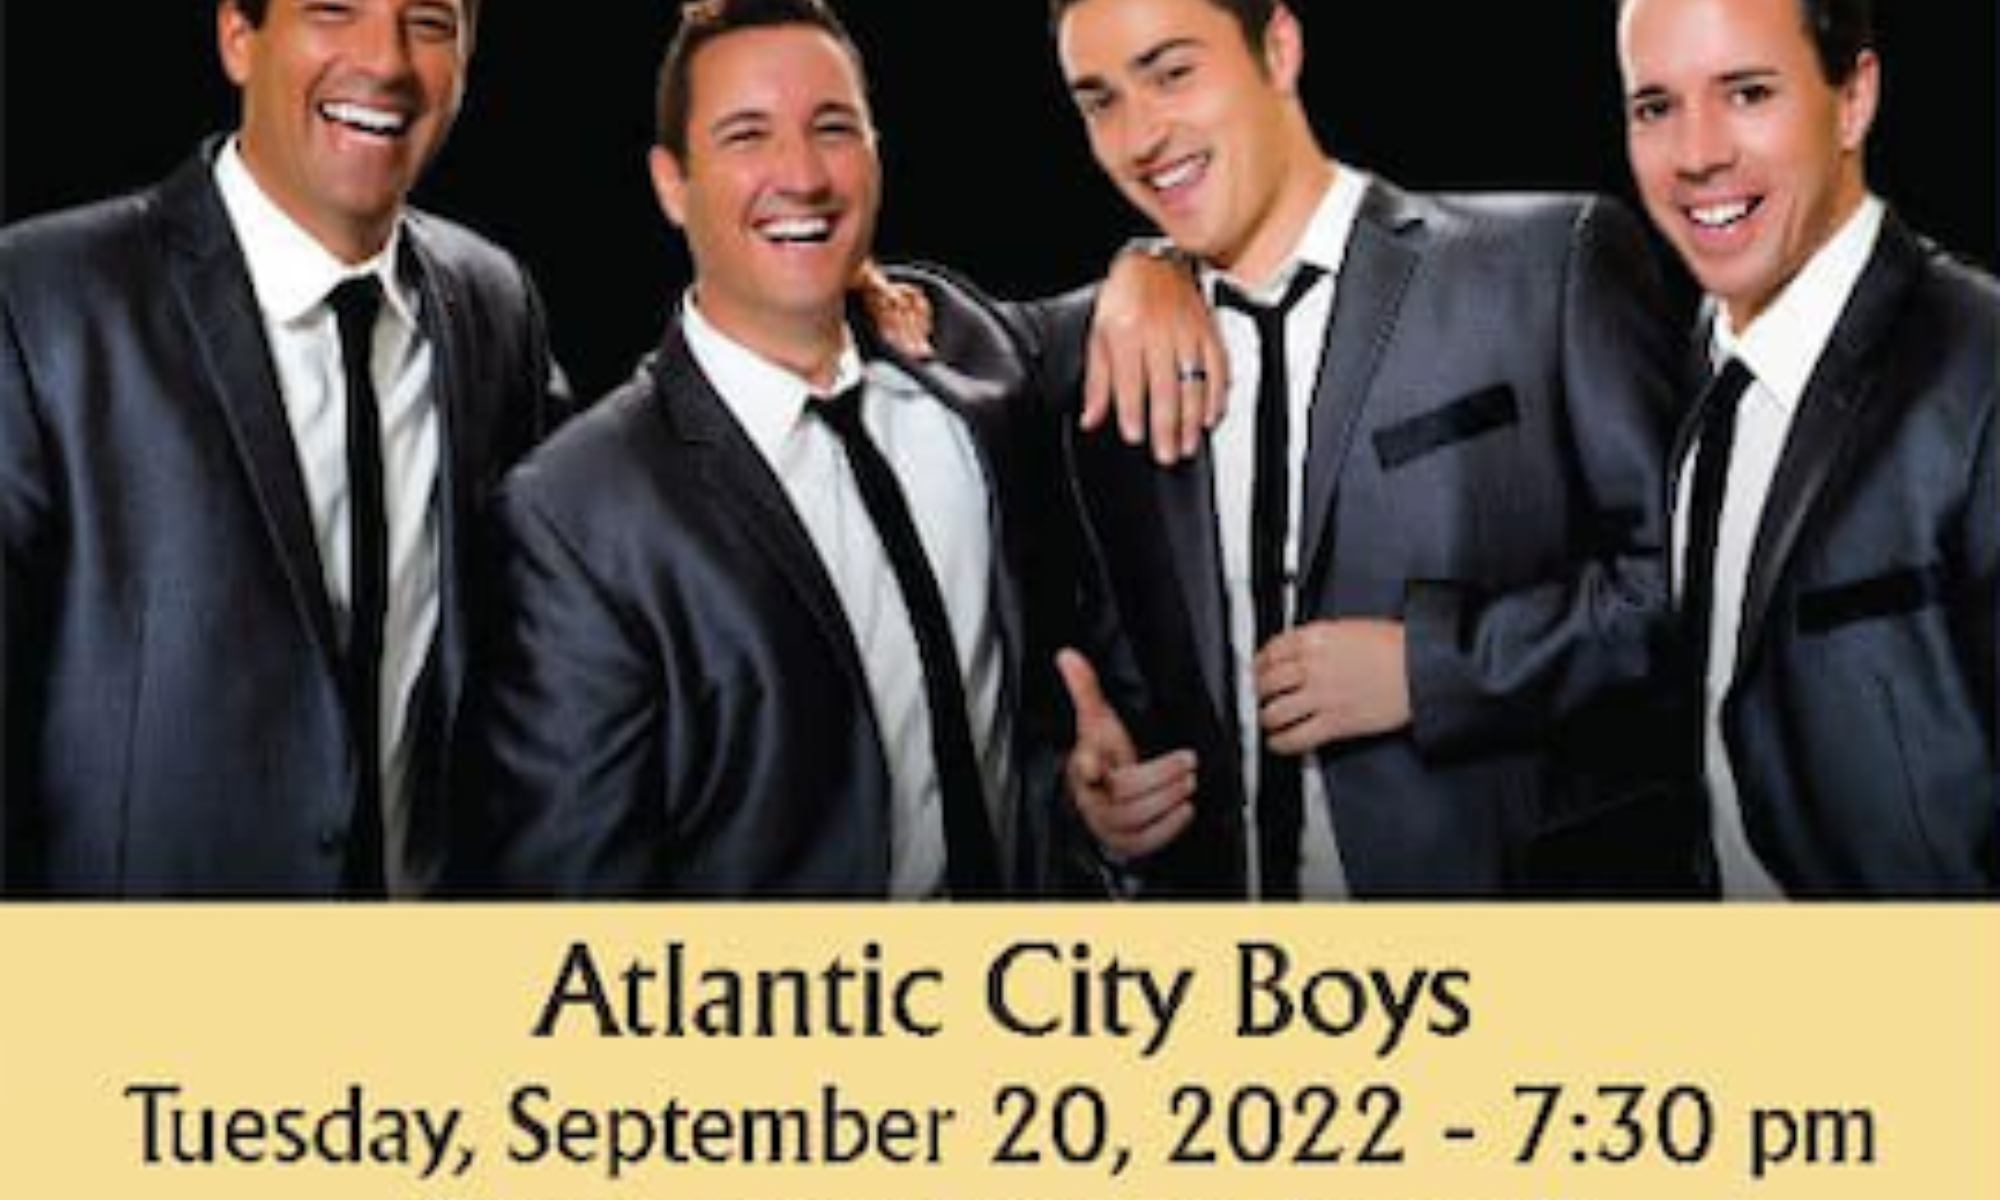 The Atlantic City Boys